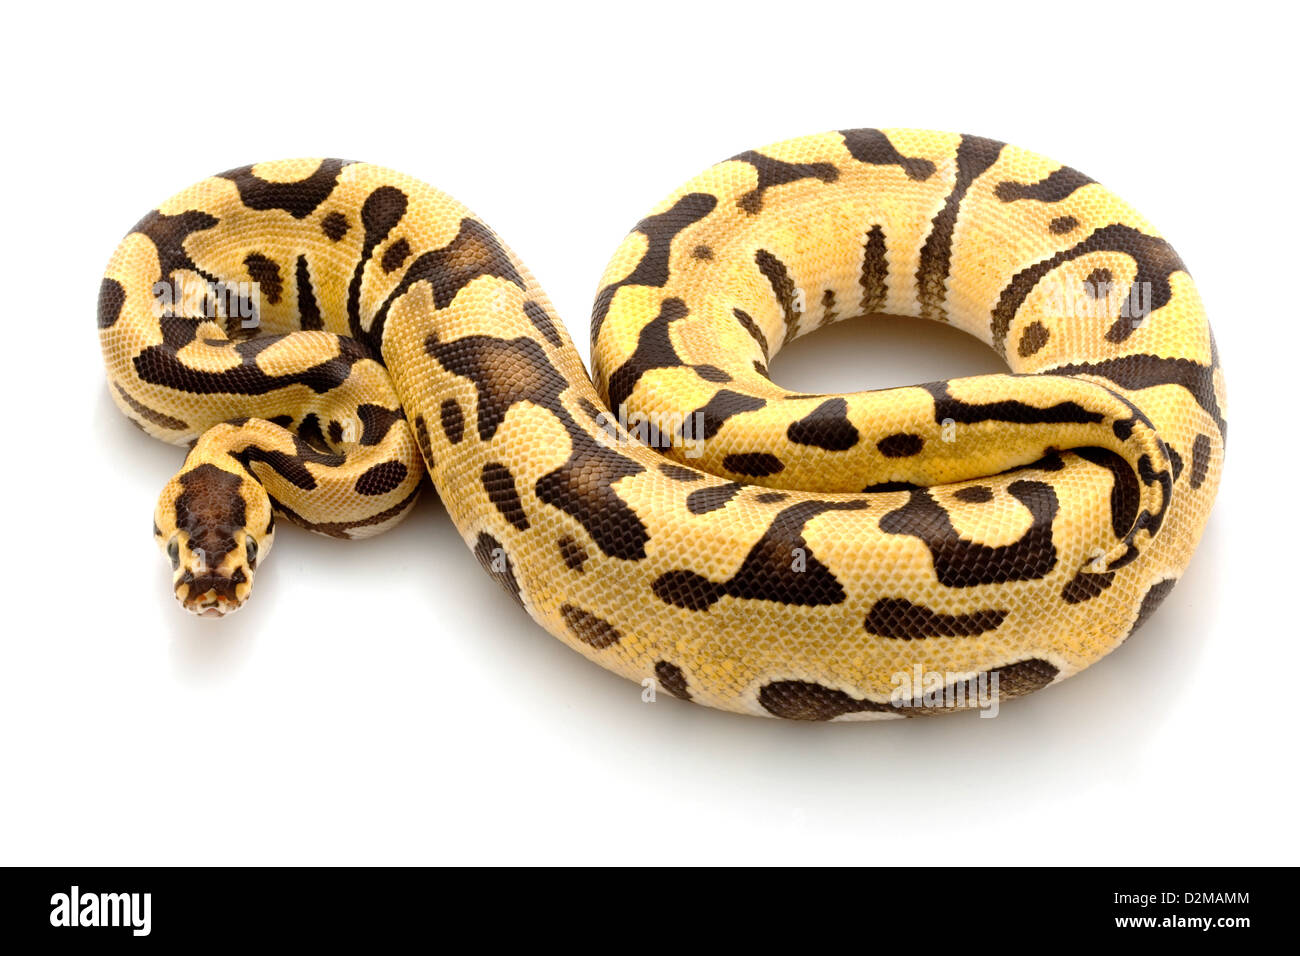 ball python (Python regius) isolated on white background. Stock Photo